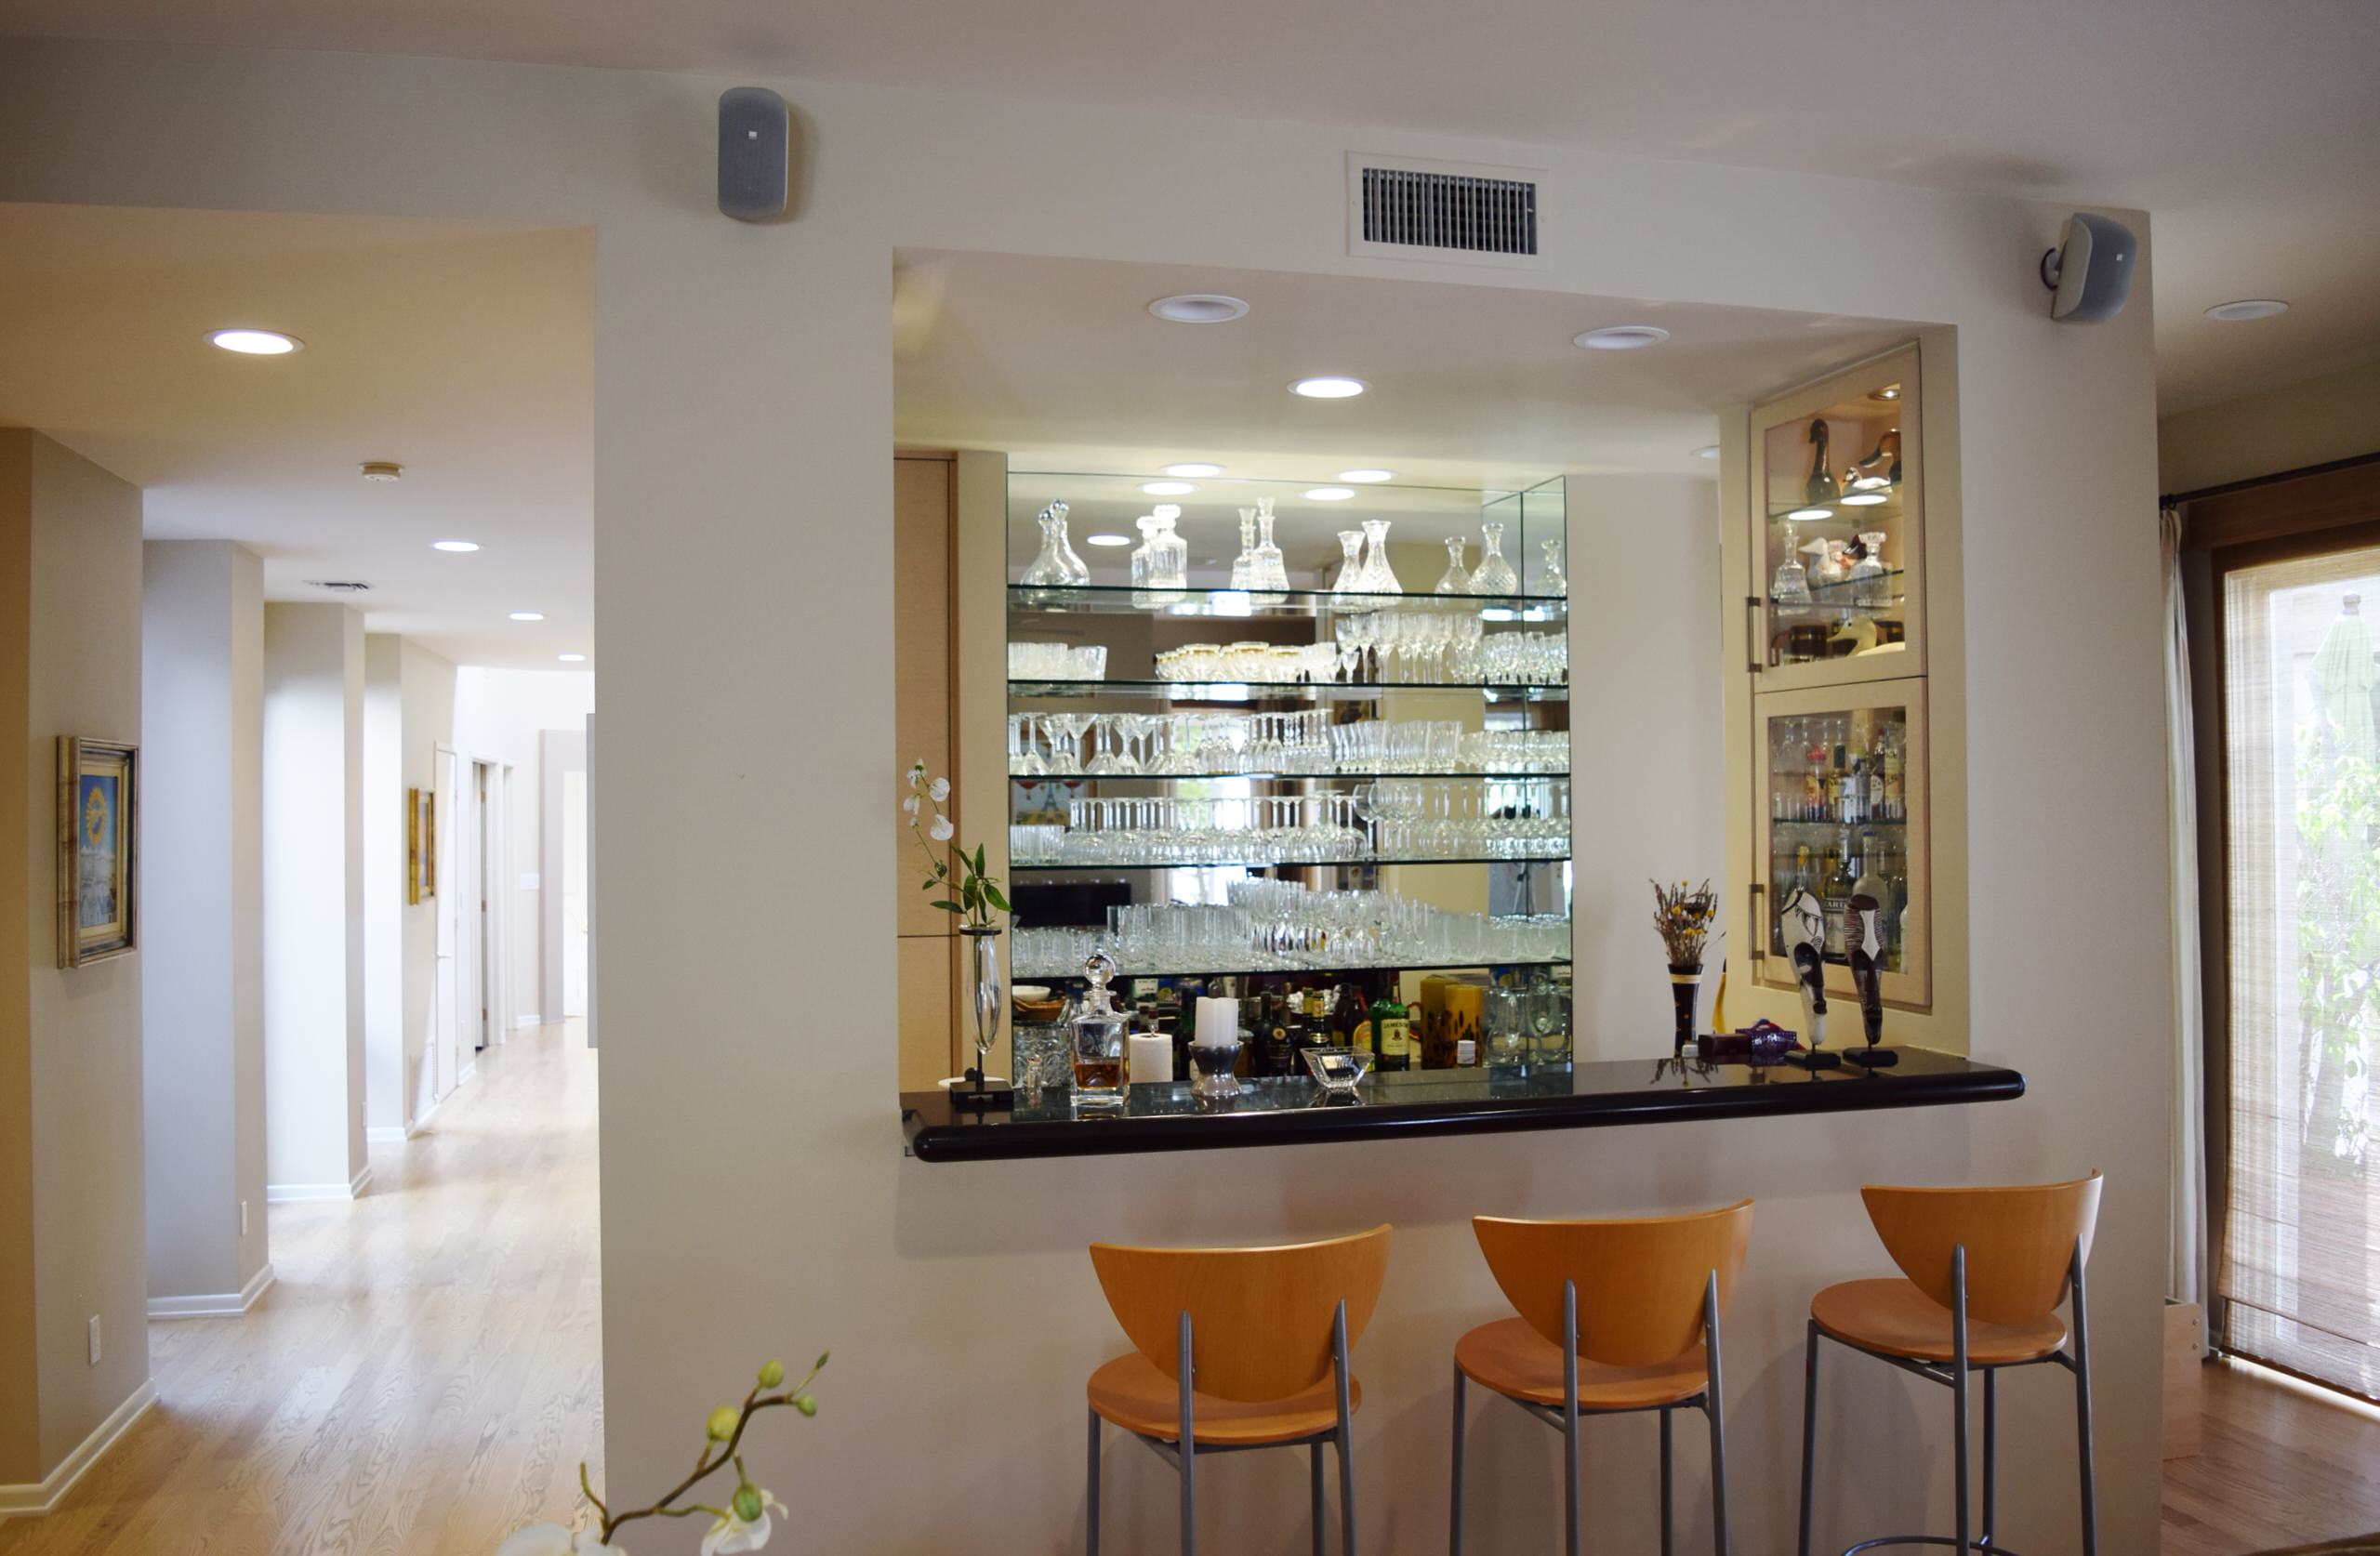 The Ratican Contemporary Breakfast Area, Family Room and Bar - Pasadena,Ca.